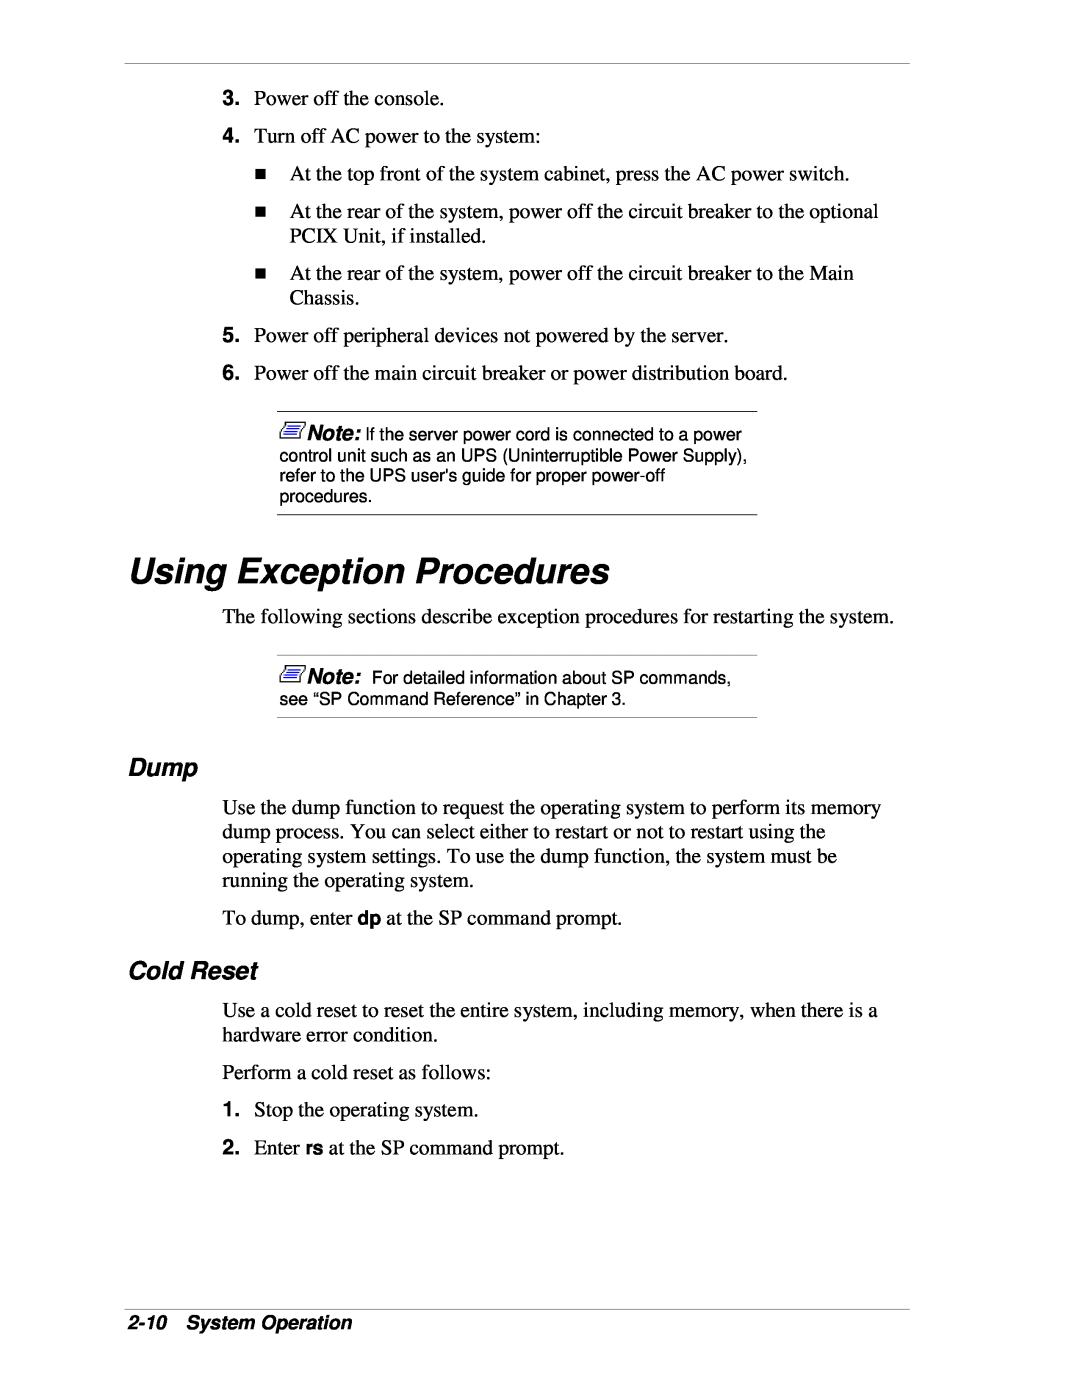 NEC 1080Xd manual Using Exception Procedures, Dump, Cold Reset 